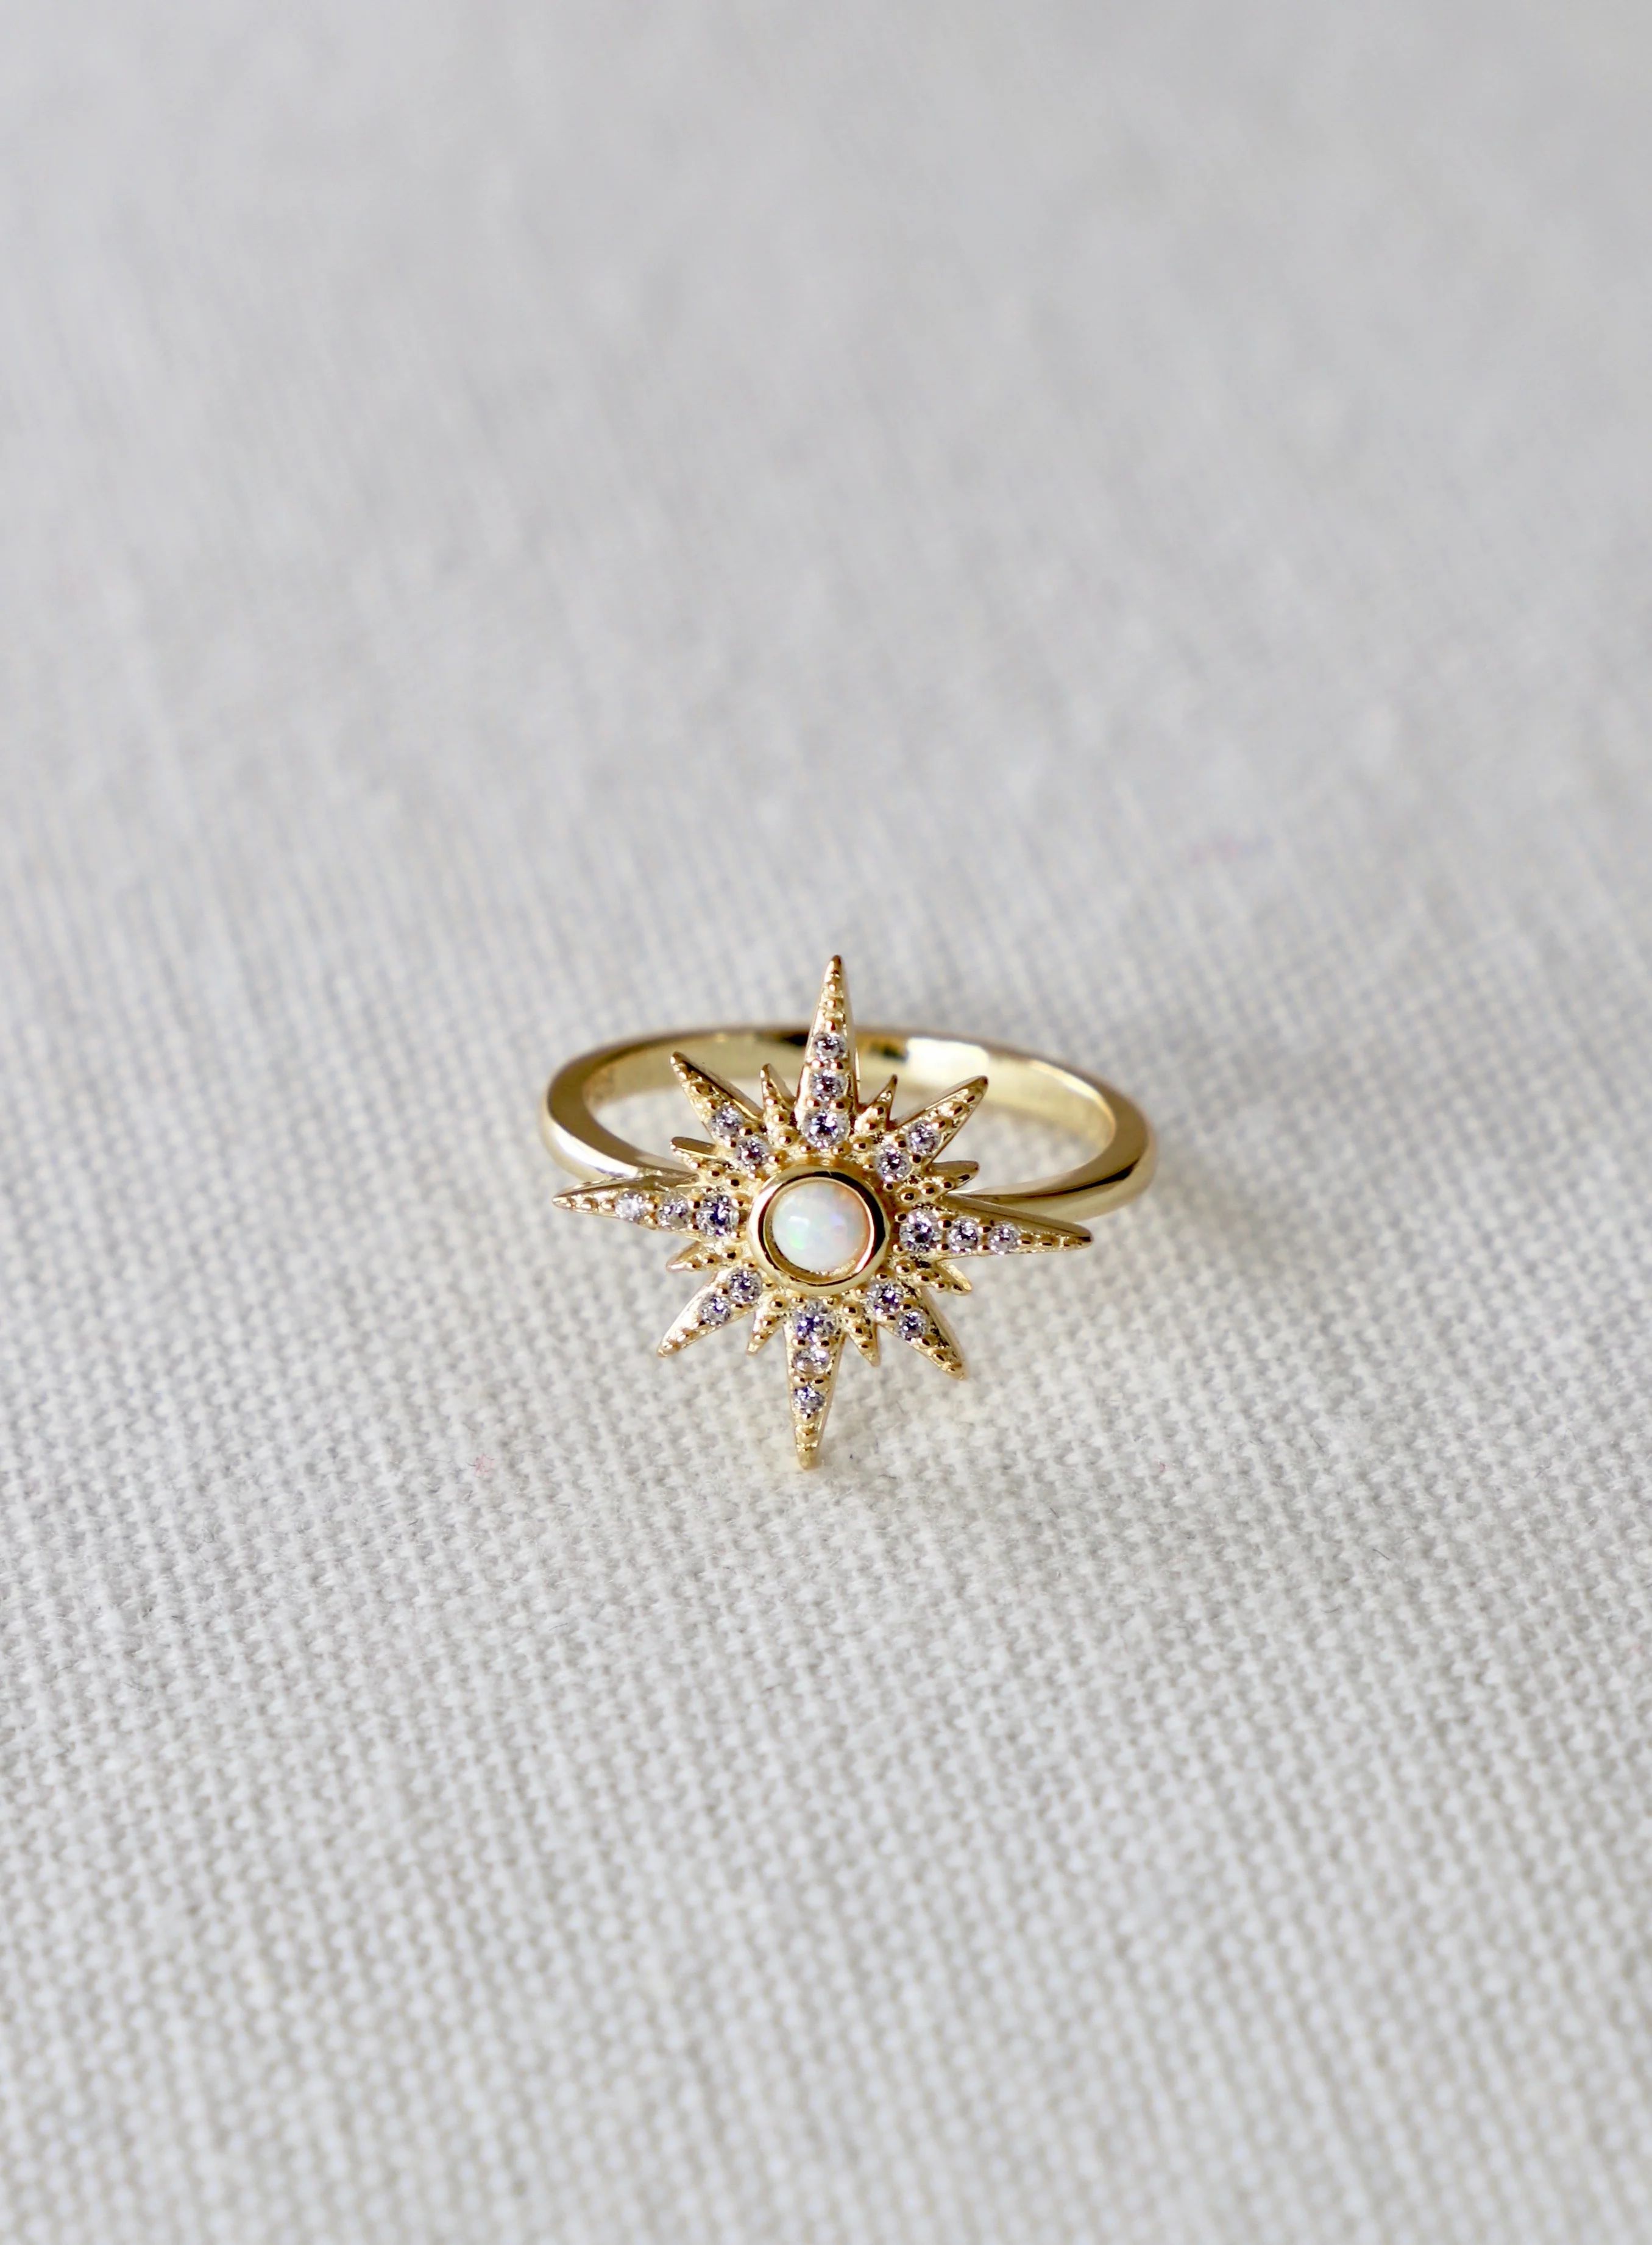 OPALITE STARBURST RING | Katie Waltman Jewelry